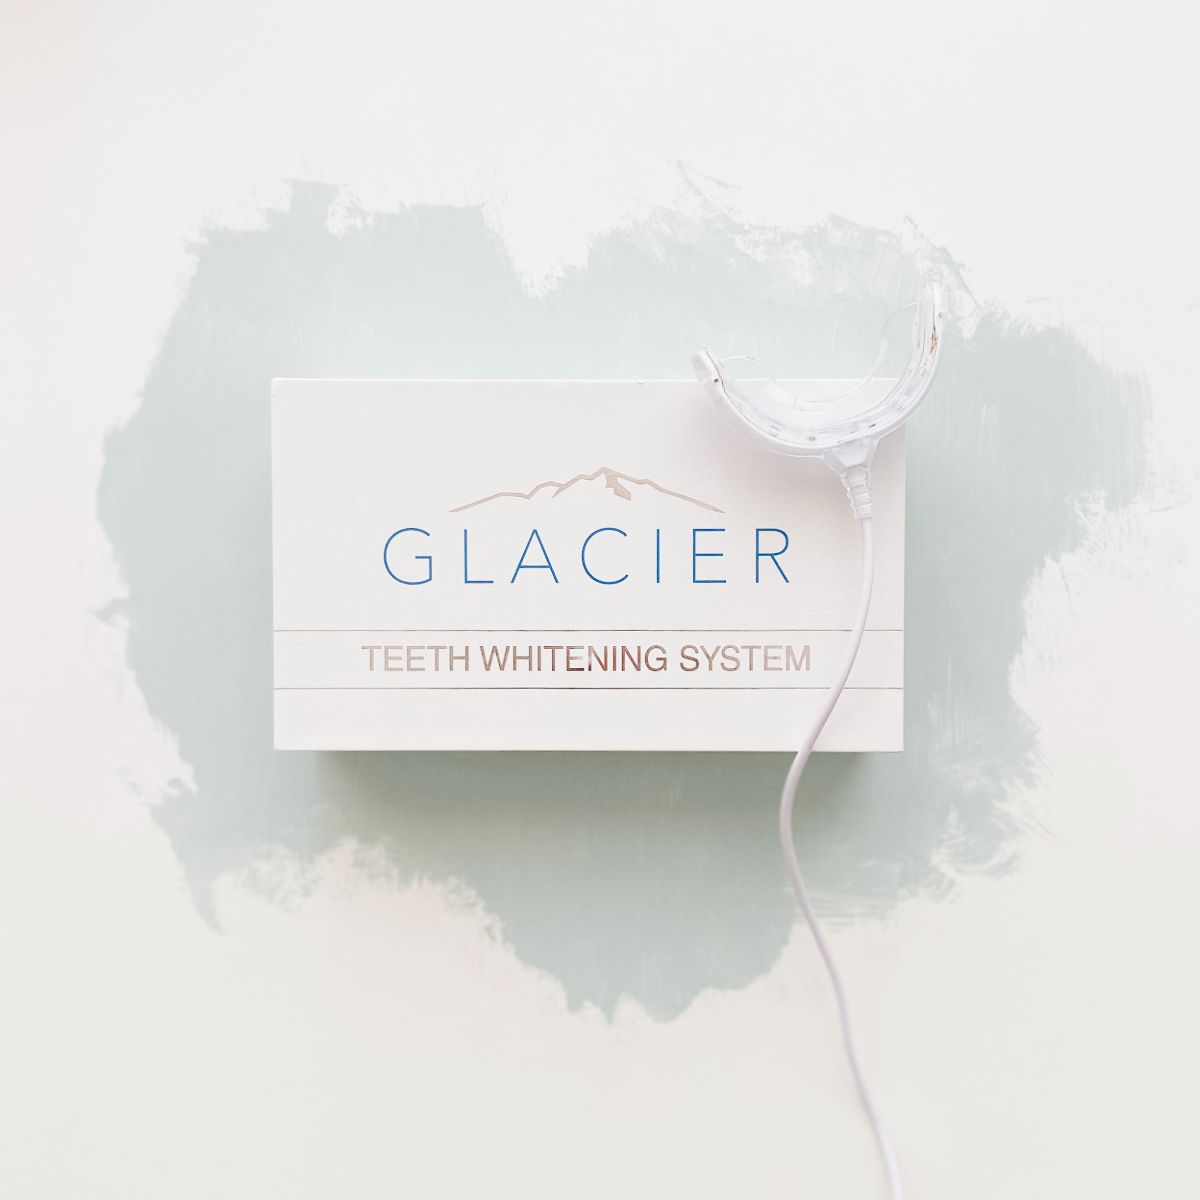 Glacier Teeth Whitening System